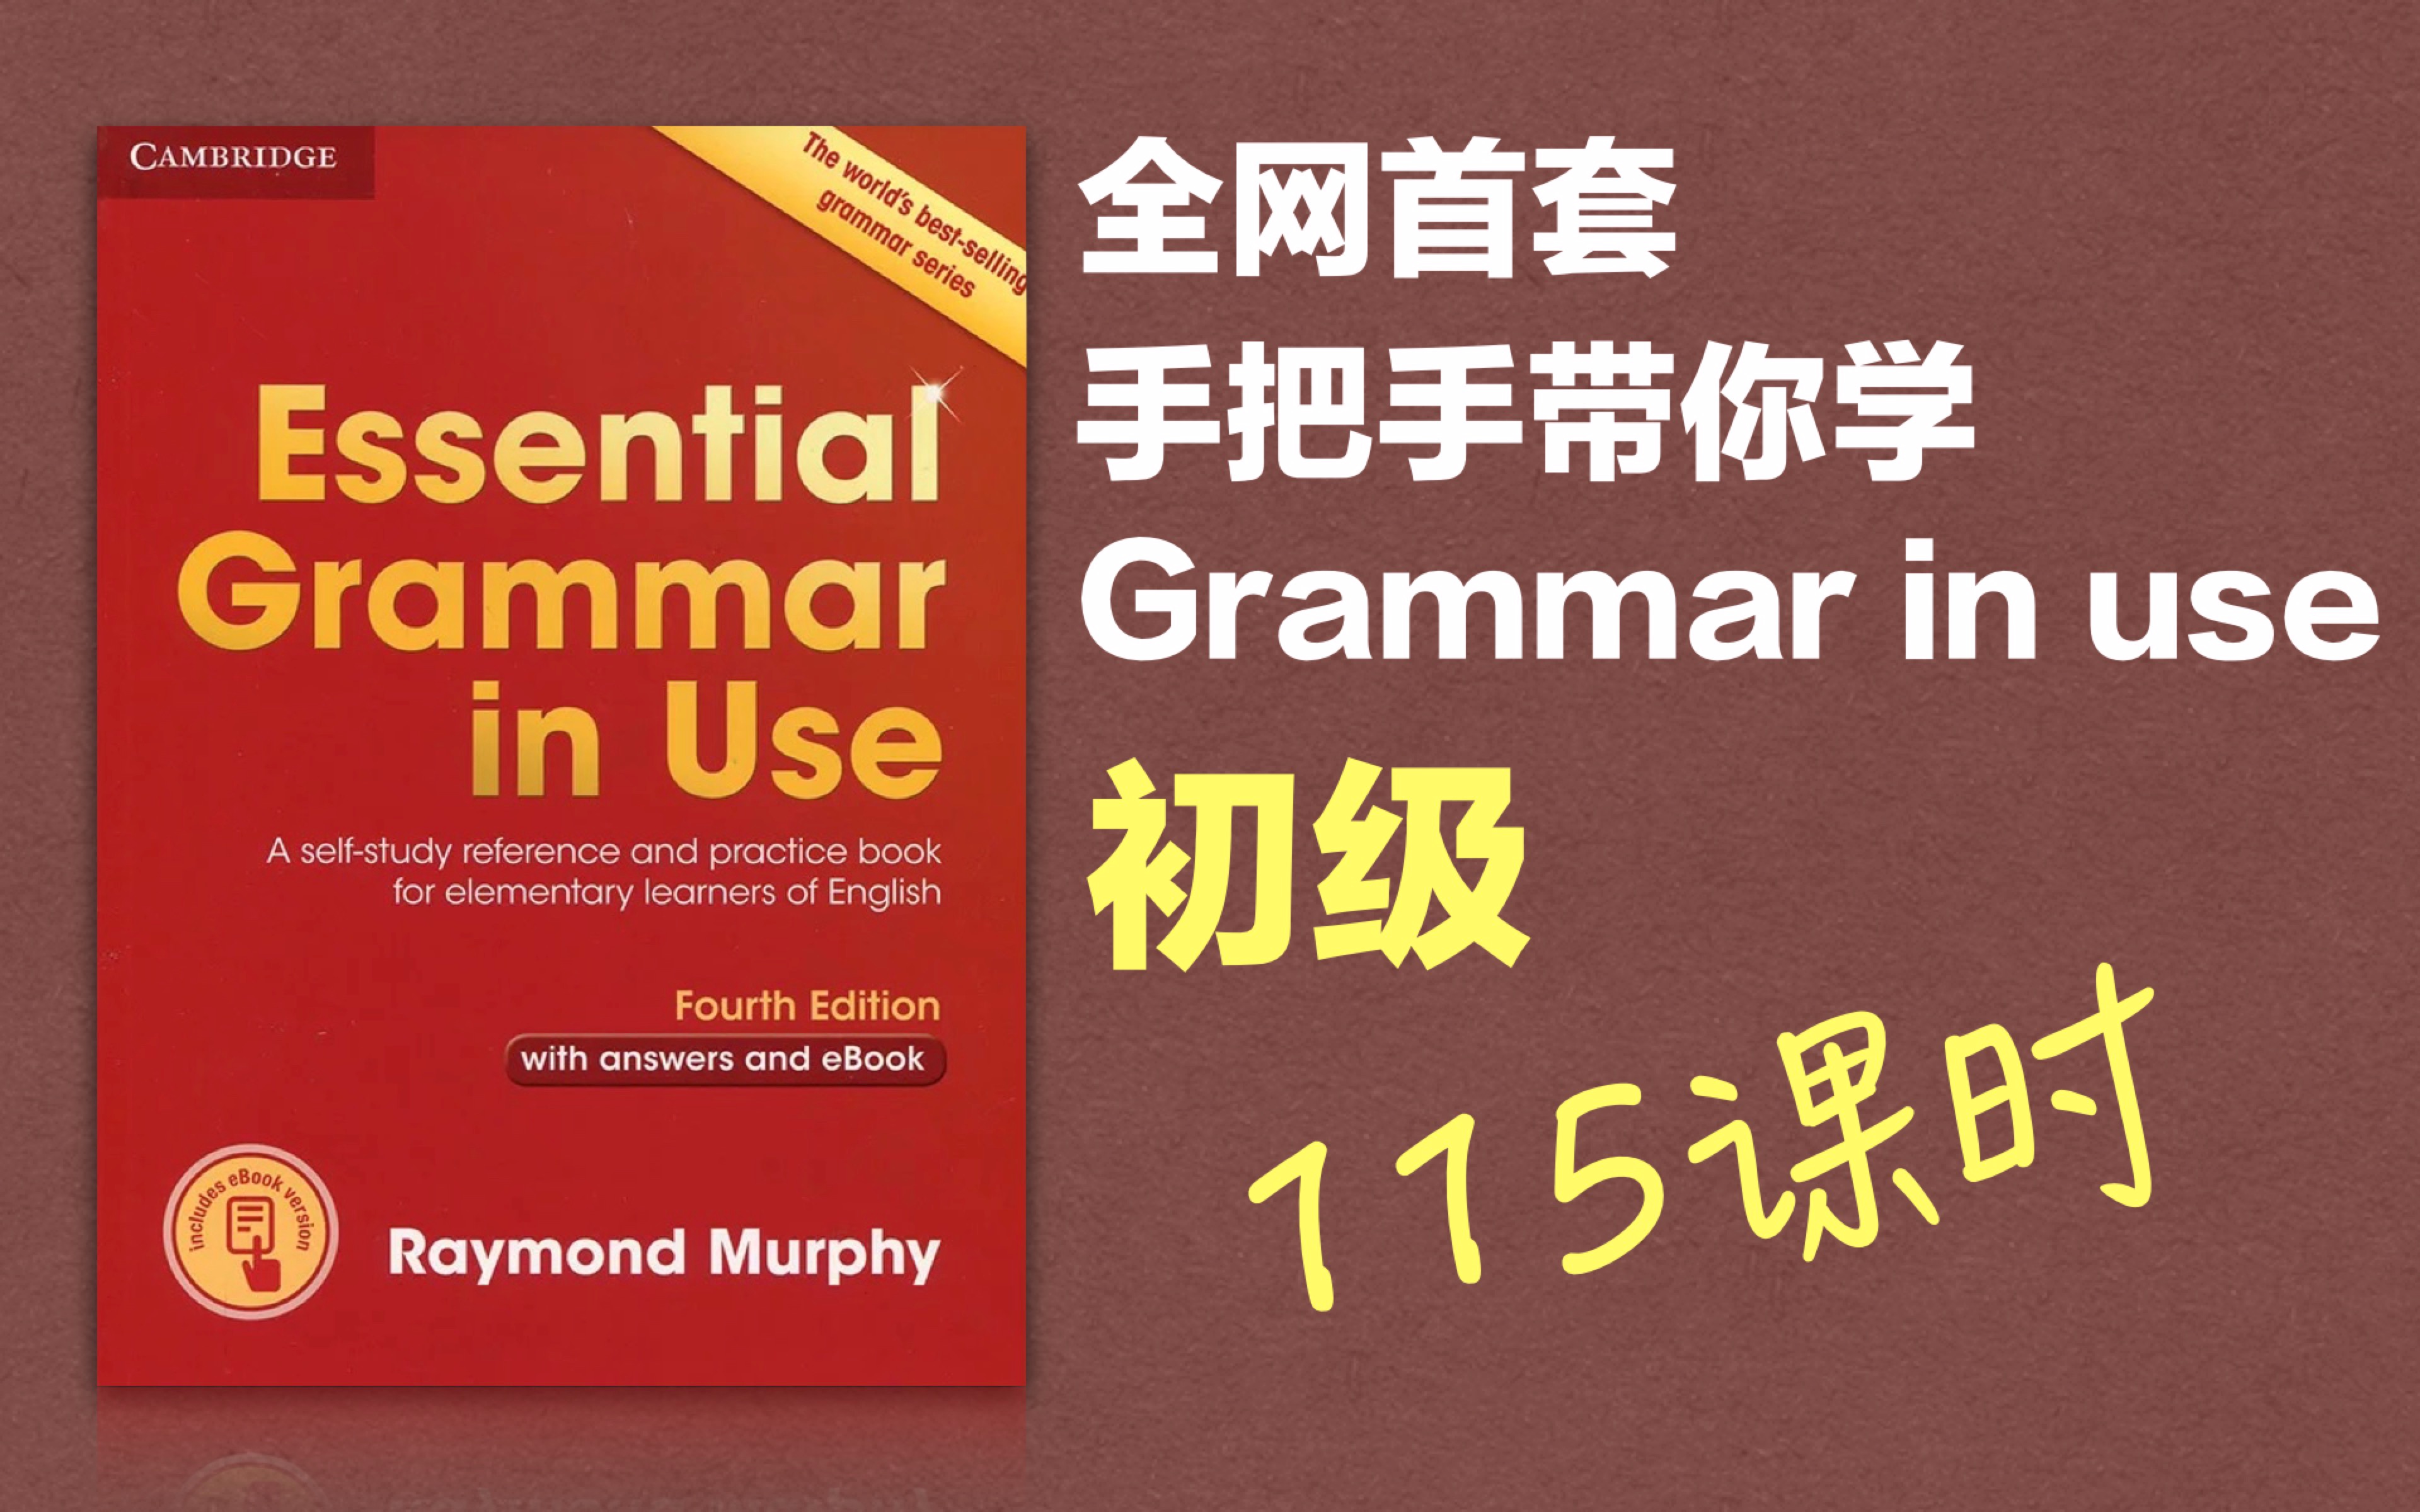 【Grammar in Use 全网首套视频教程】剑桥语法在用初级